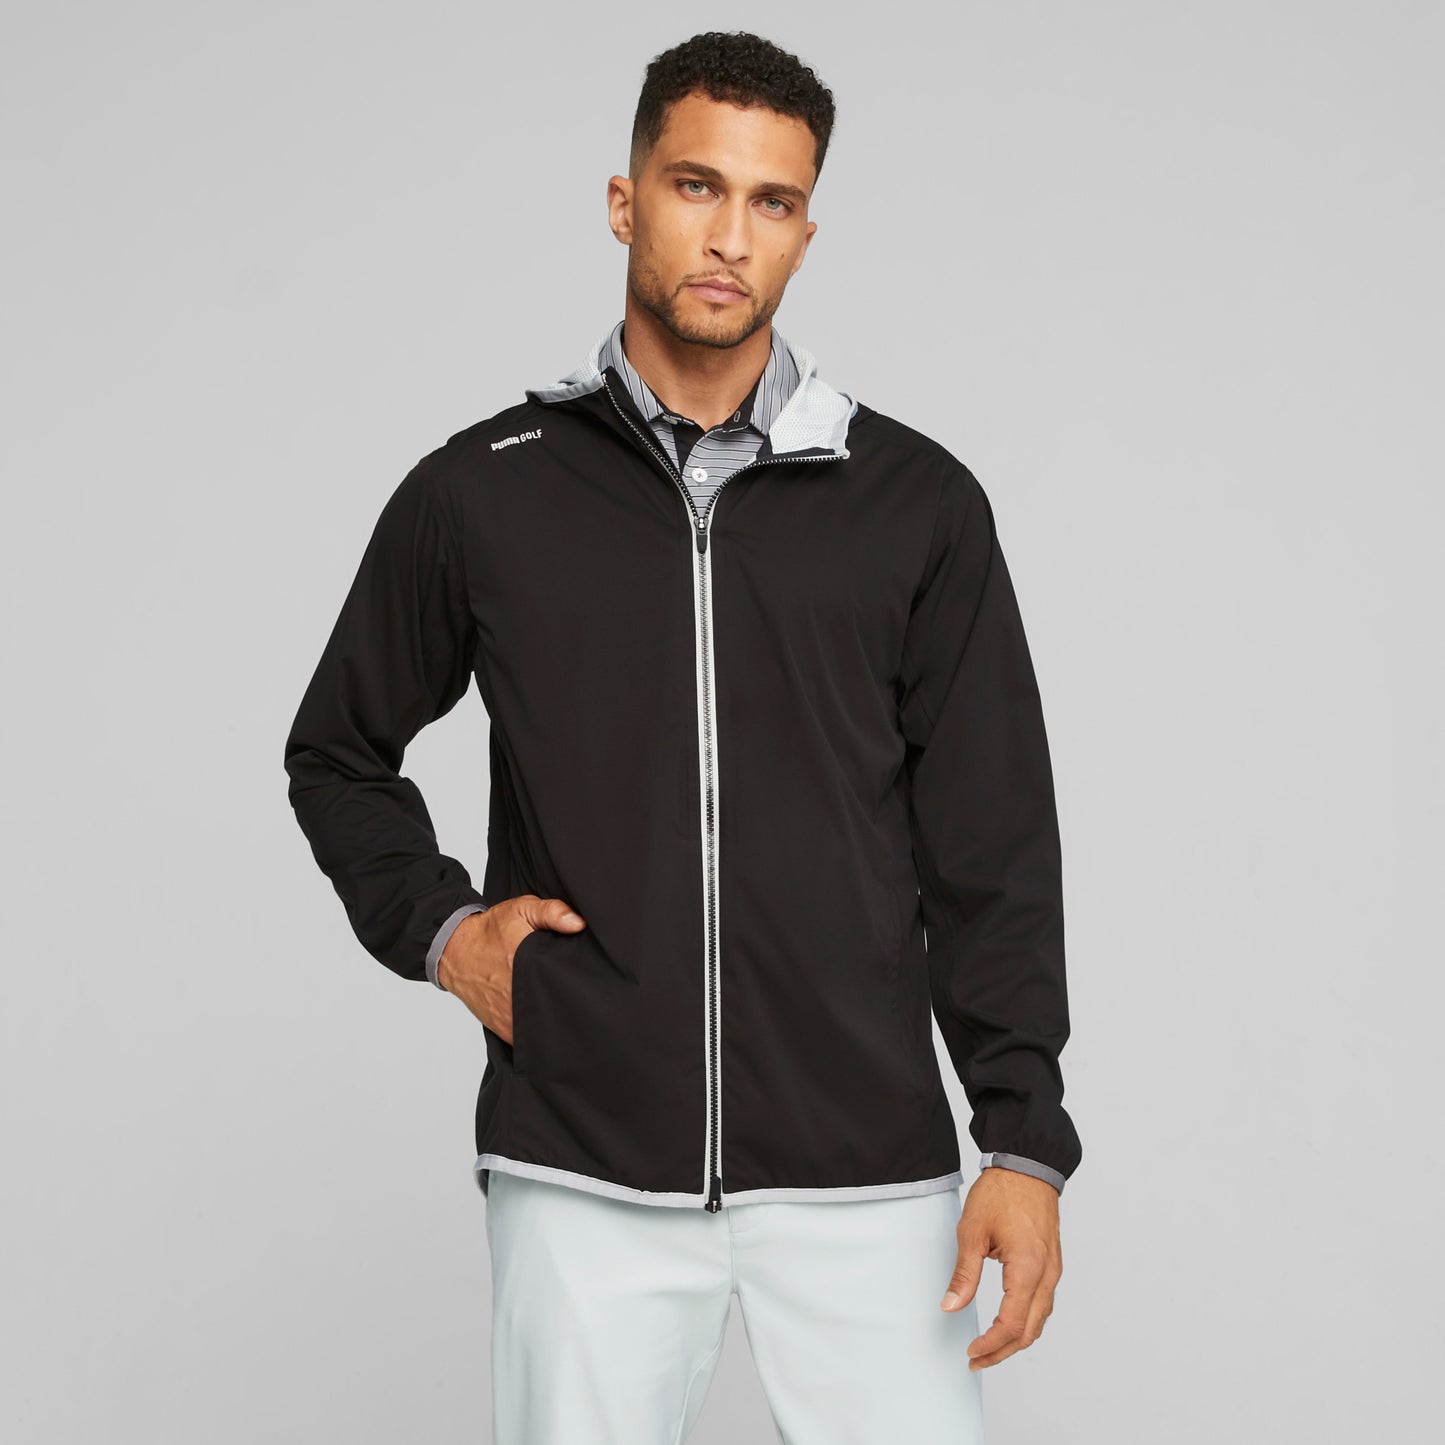 DRYLBL Packable Rain PUMA – Golf Golf Jacket